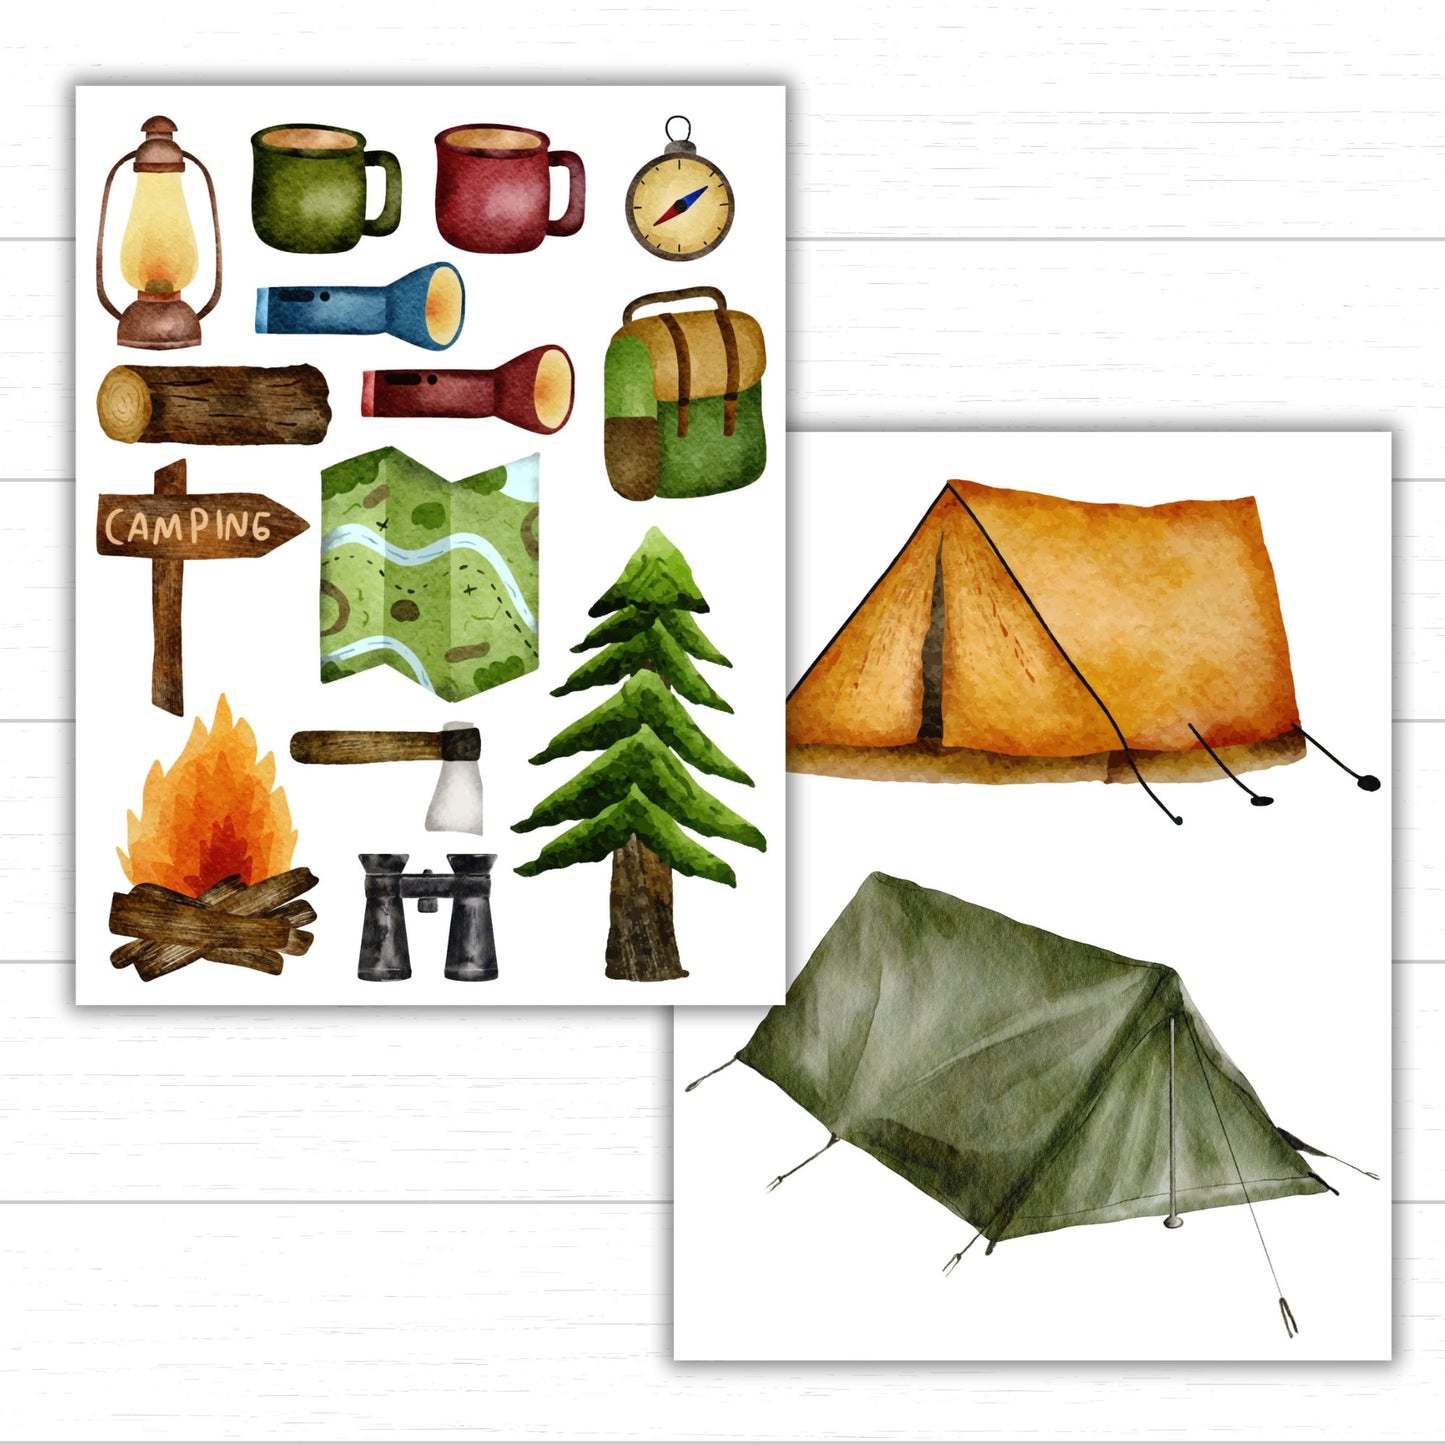 Elf Camping Props and Accessories, Elf Camping Outdoors, Elf Ideas for December, Elf Camping Set Up, Easy Elf Idea, Elf Printables, Elf Idea